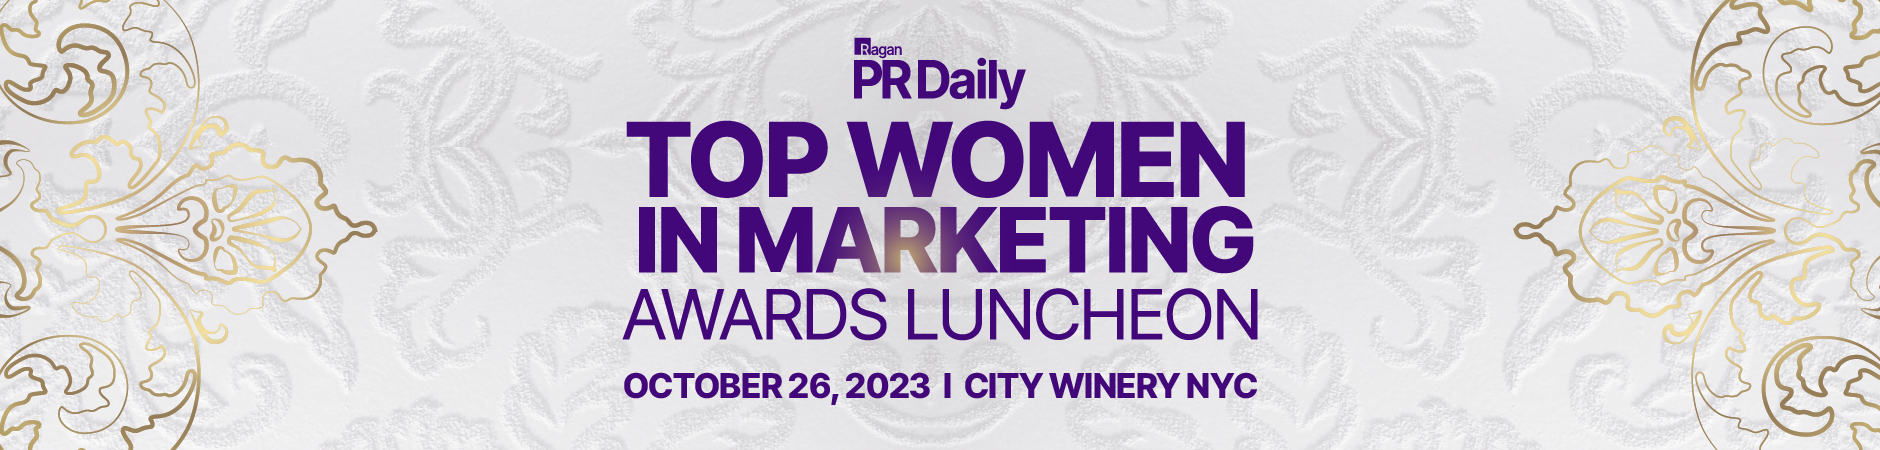 Top Women in Marketing Awards Luncheon